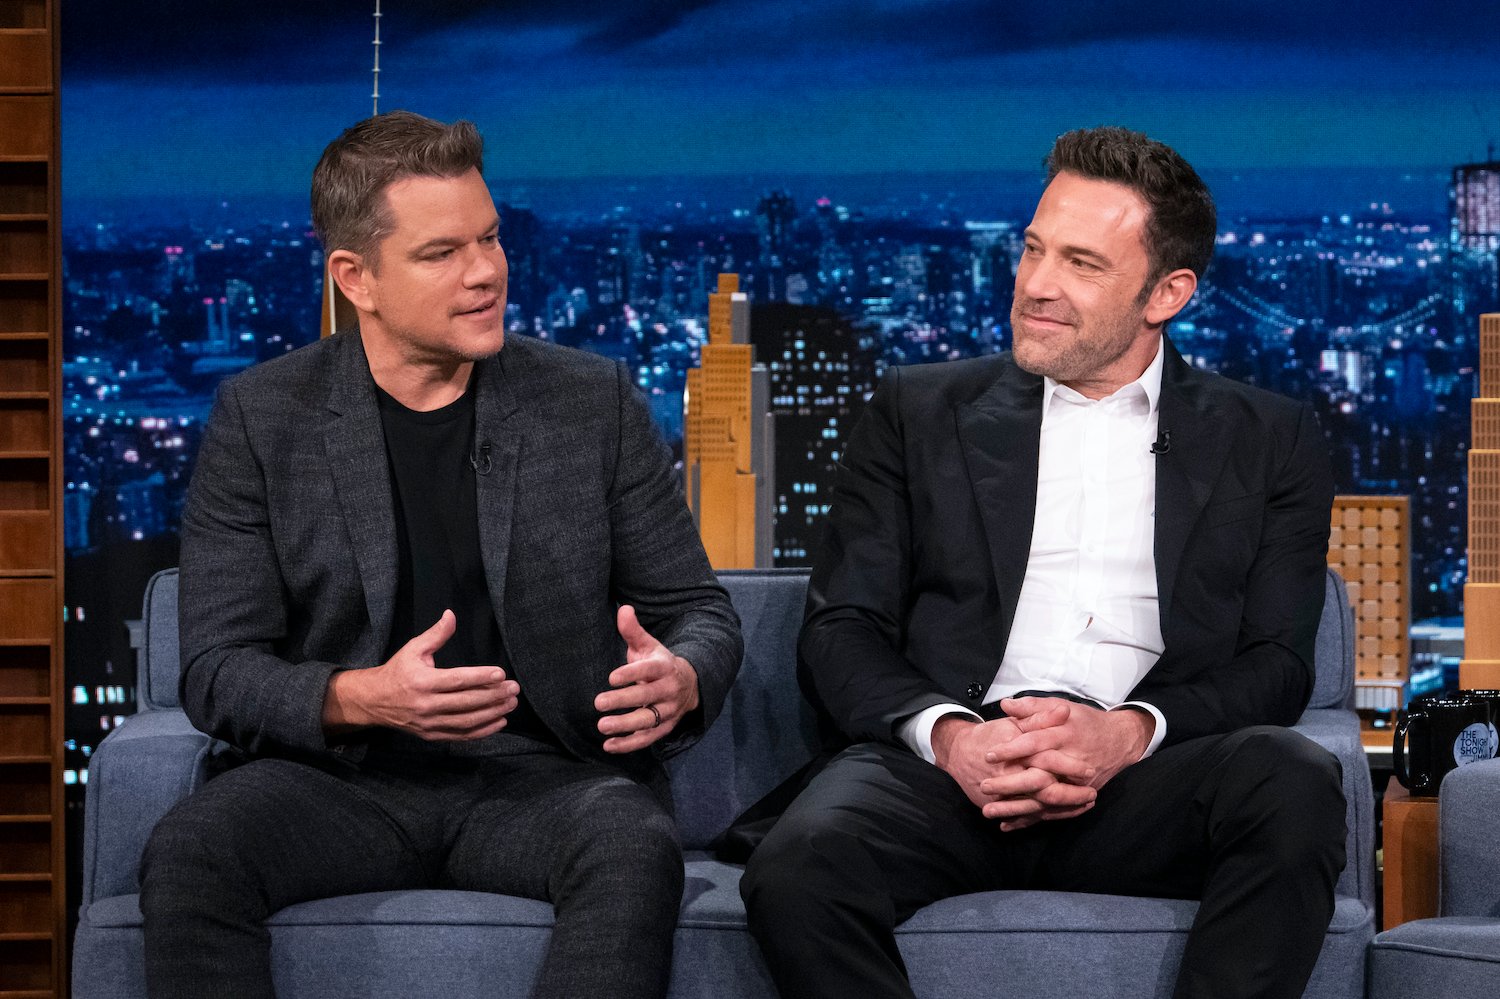 Matt Damon and Ben Affleck wear suits during an interview on 'The Tonight Show Starring Jimmy Fallon' 